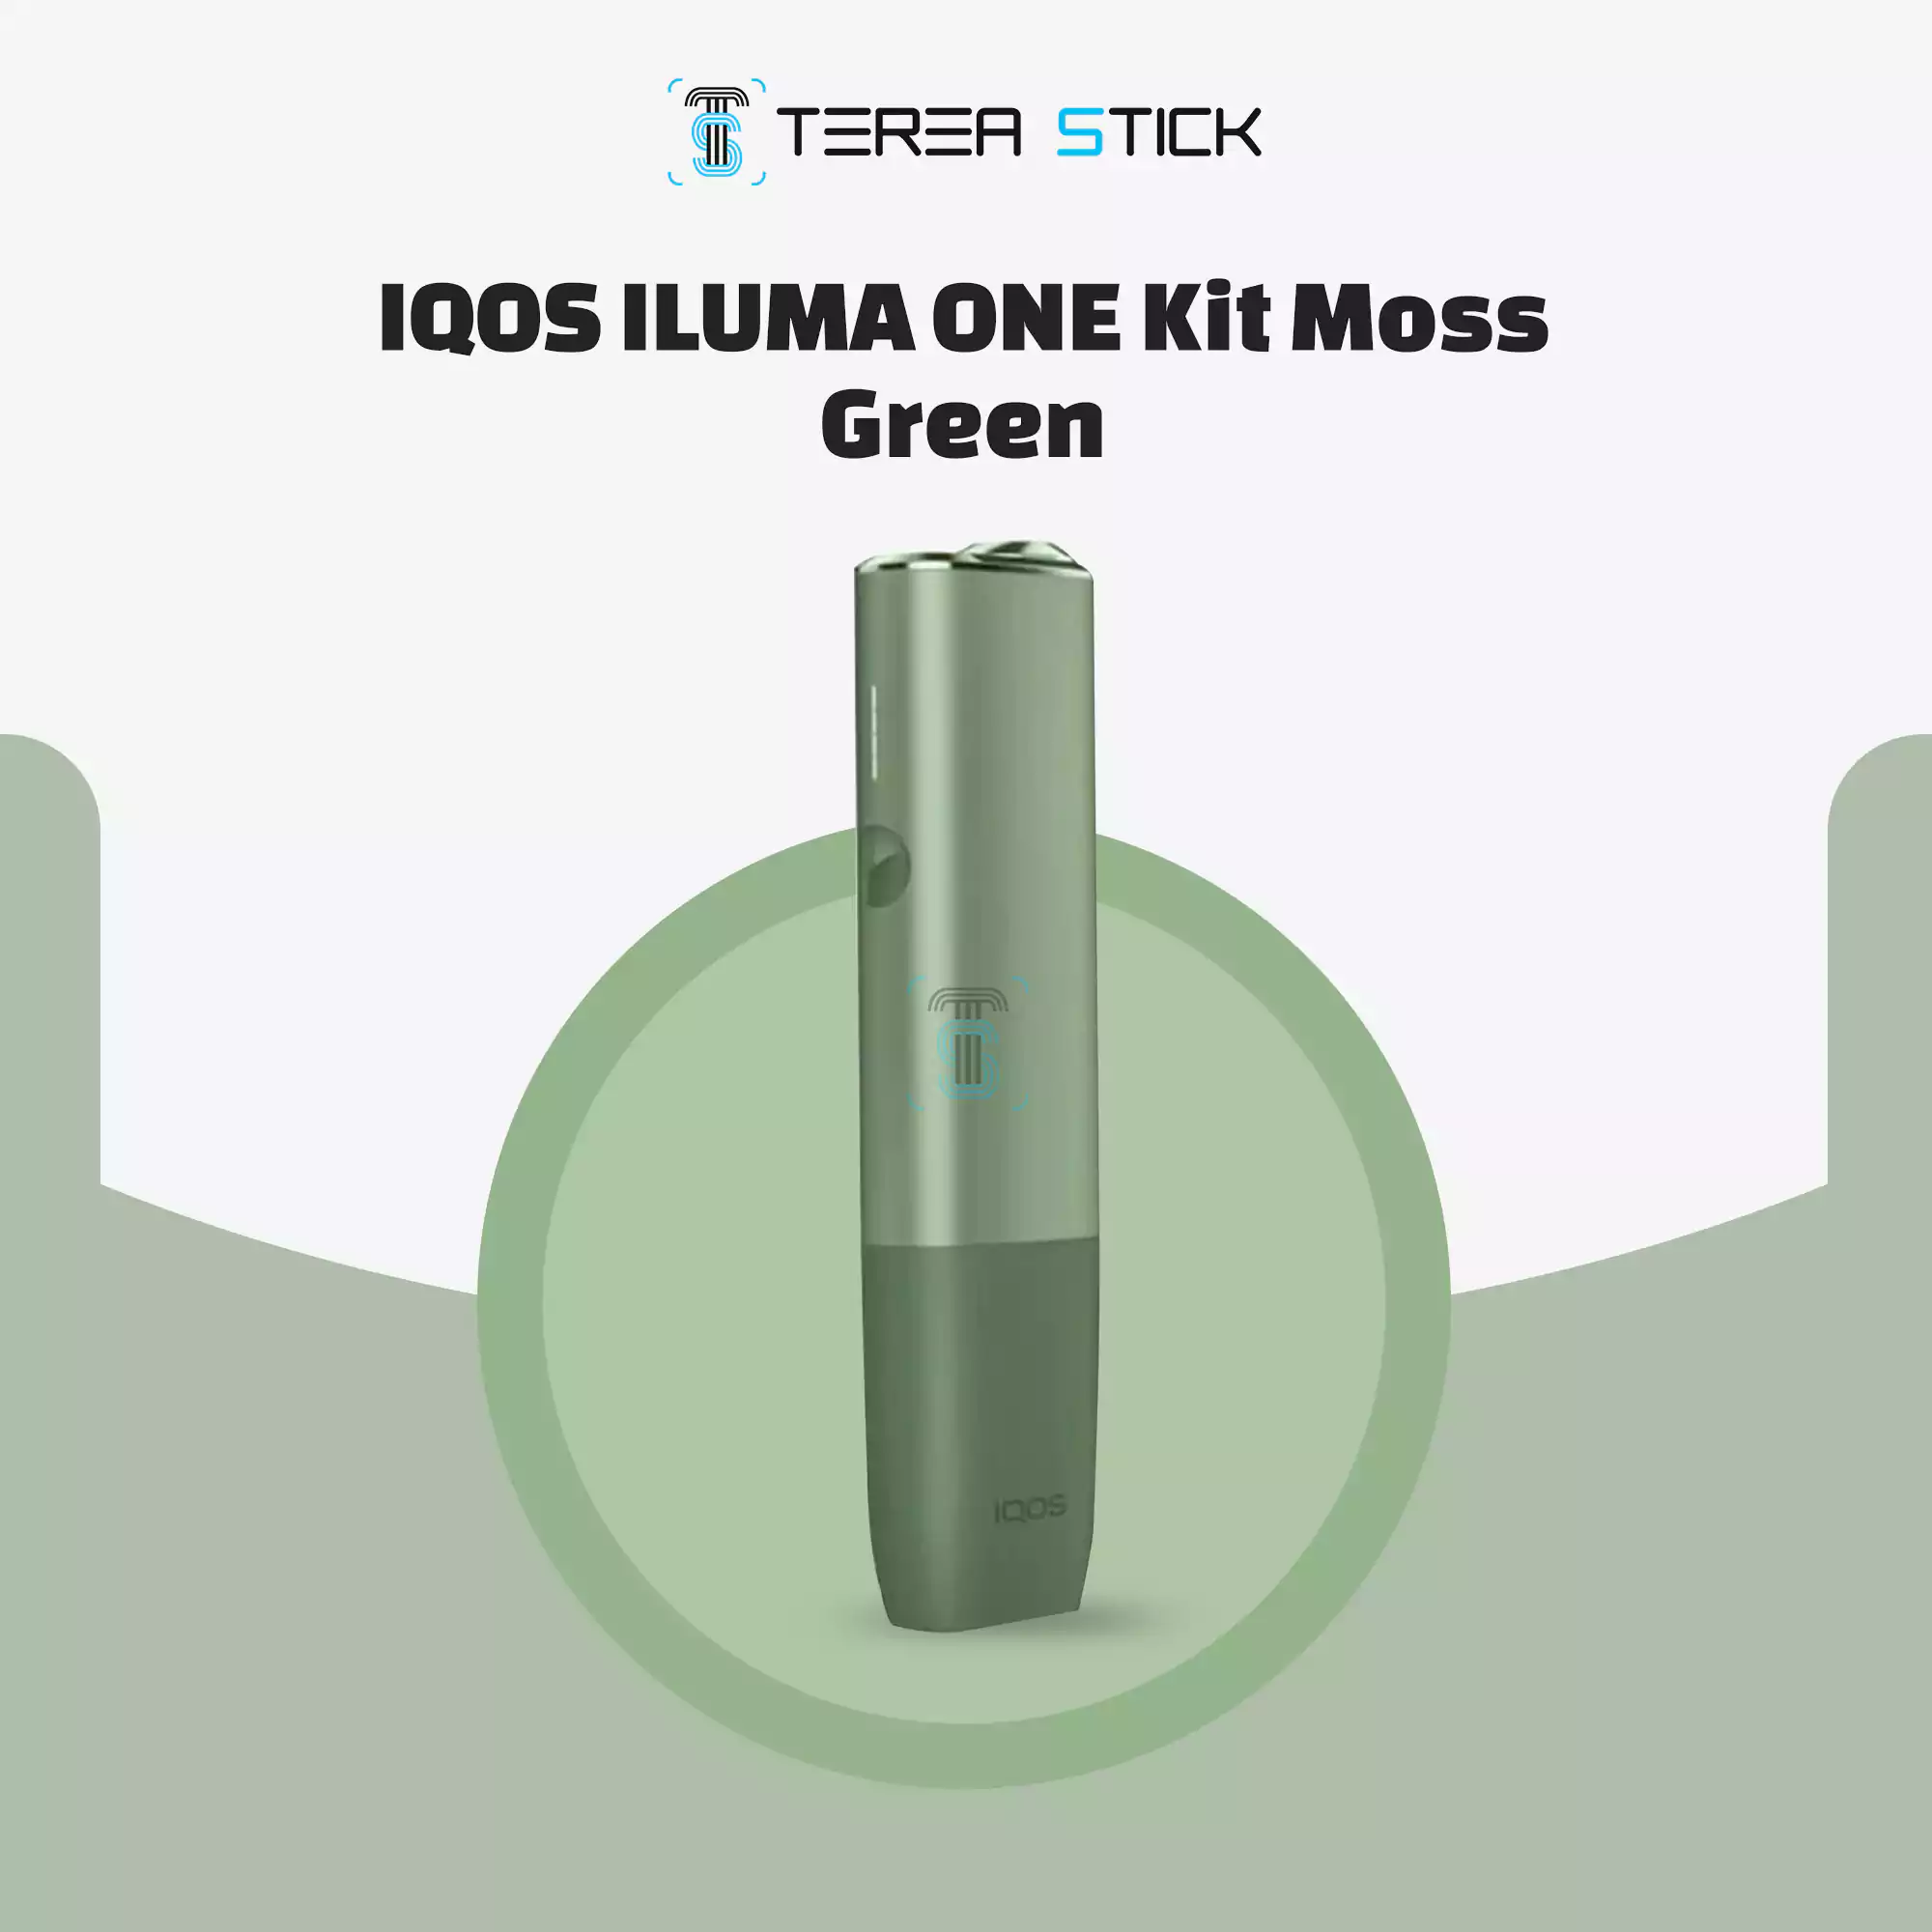 Buy Online IQOS ILUMA ONE Moss Green - price 179 AED